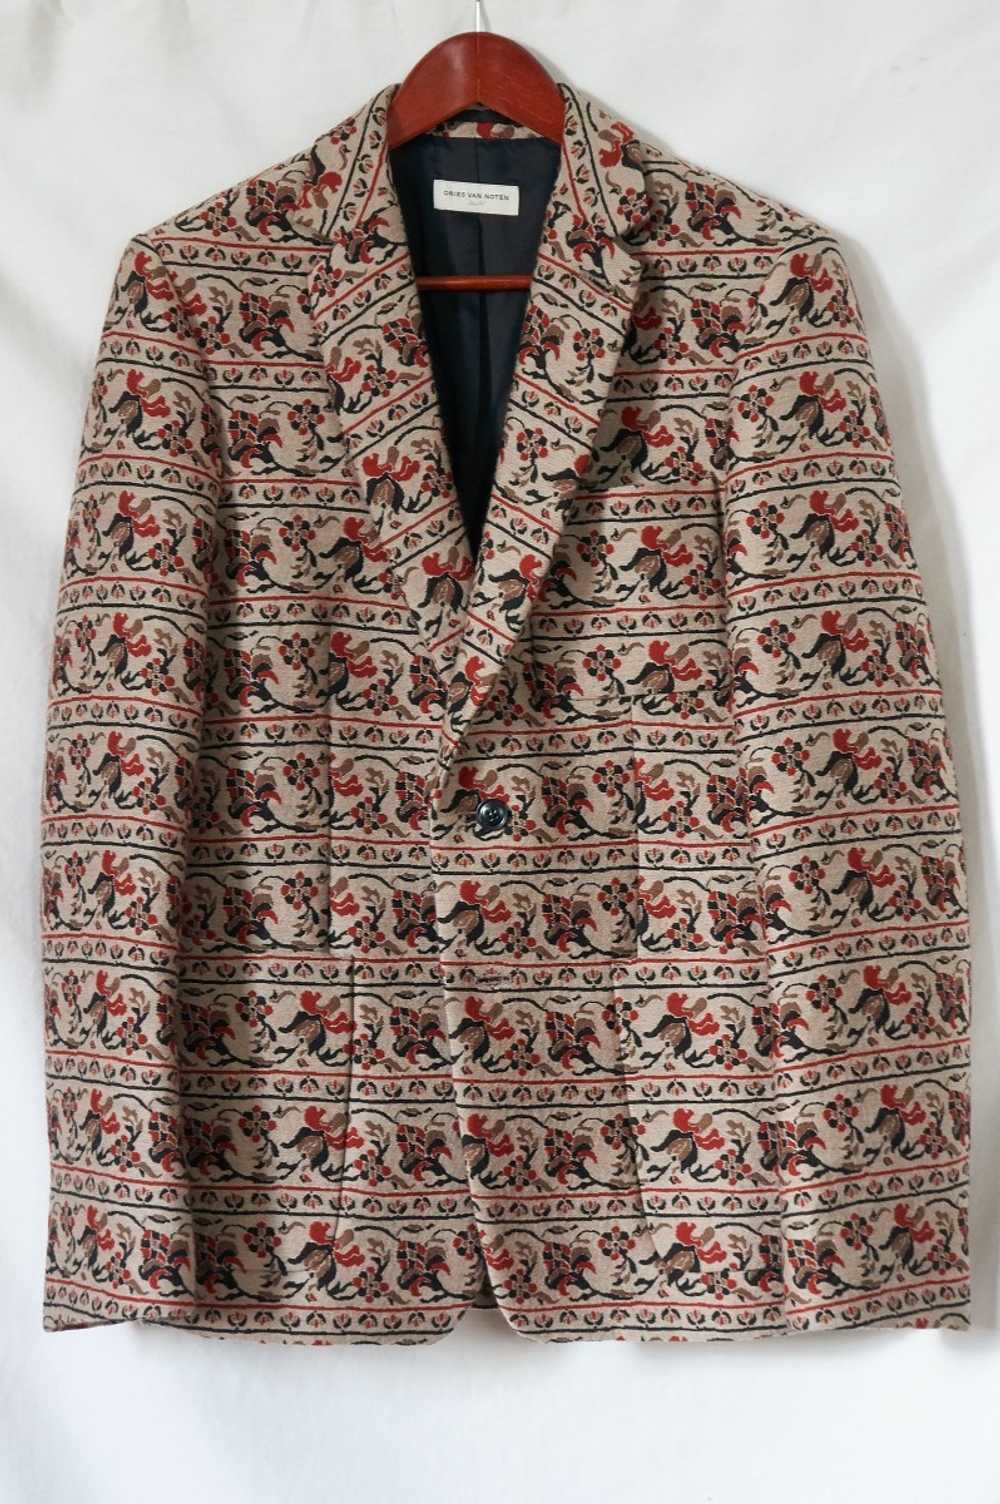 Dries Van Noten AW13 heavy wool floral jacket - image 1